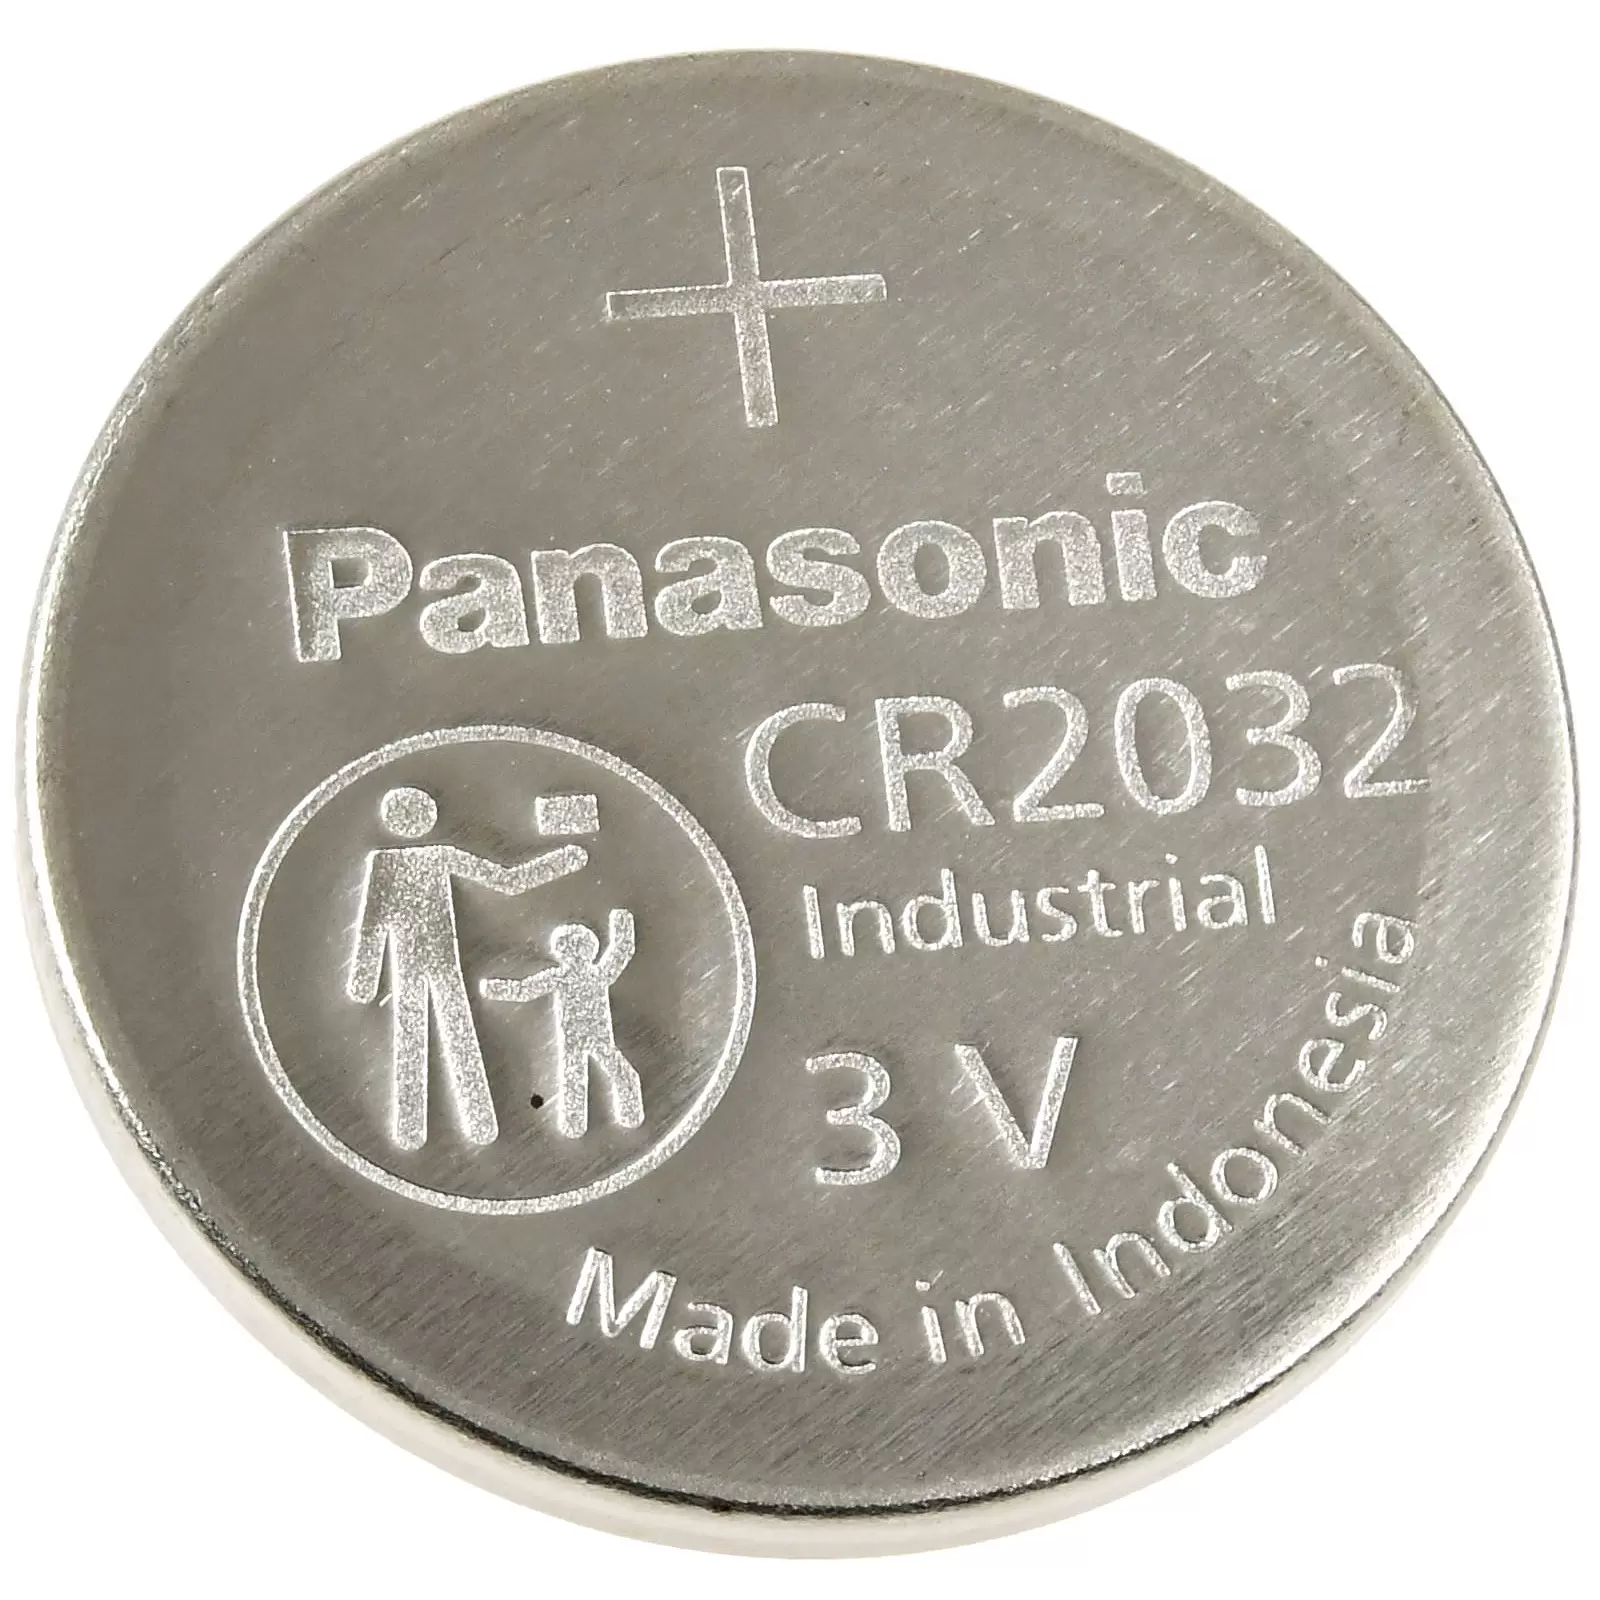 Panasonic Lithium Knopfzelle CR2032 / DL2032 / ECR2032 1 Stück lose